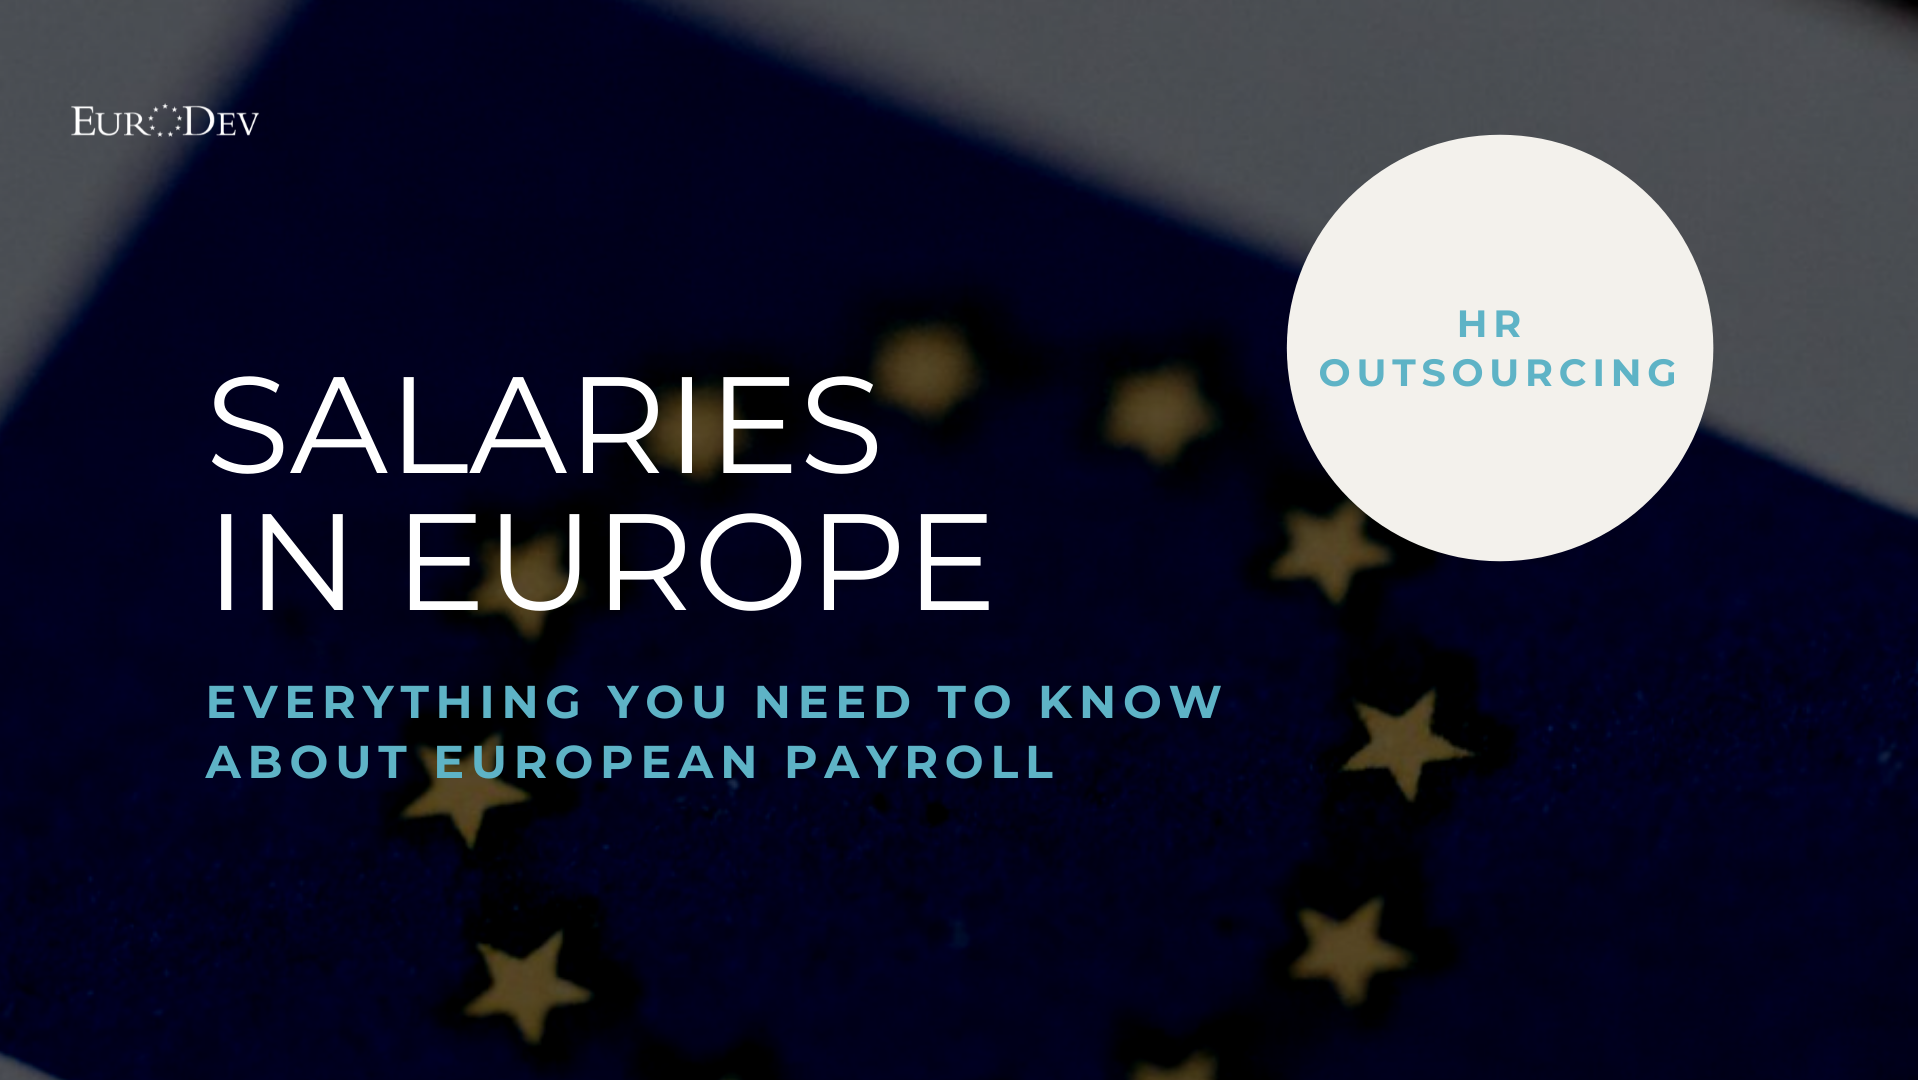 payroll in Europe, European salaries, job market in Europe